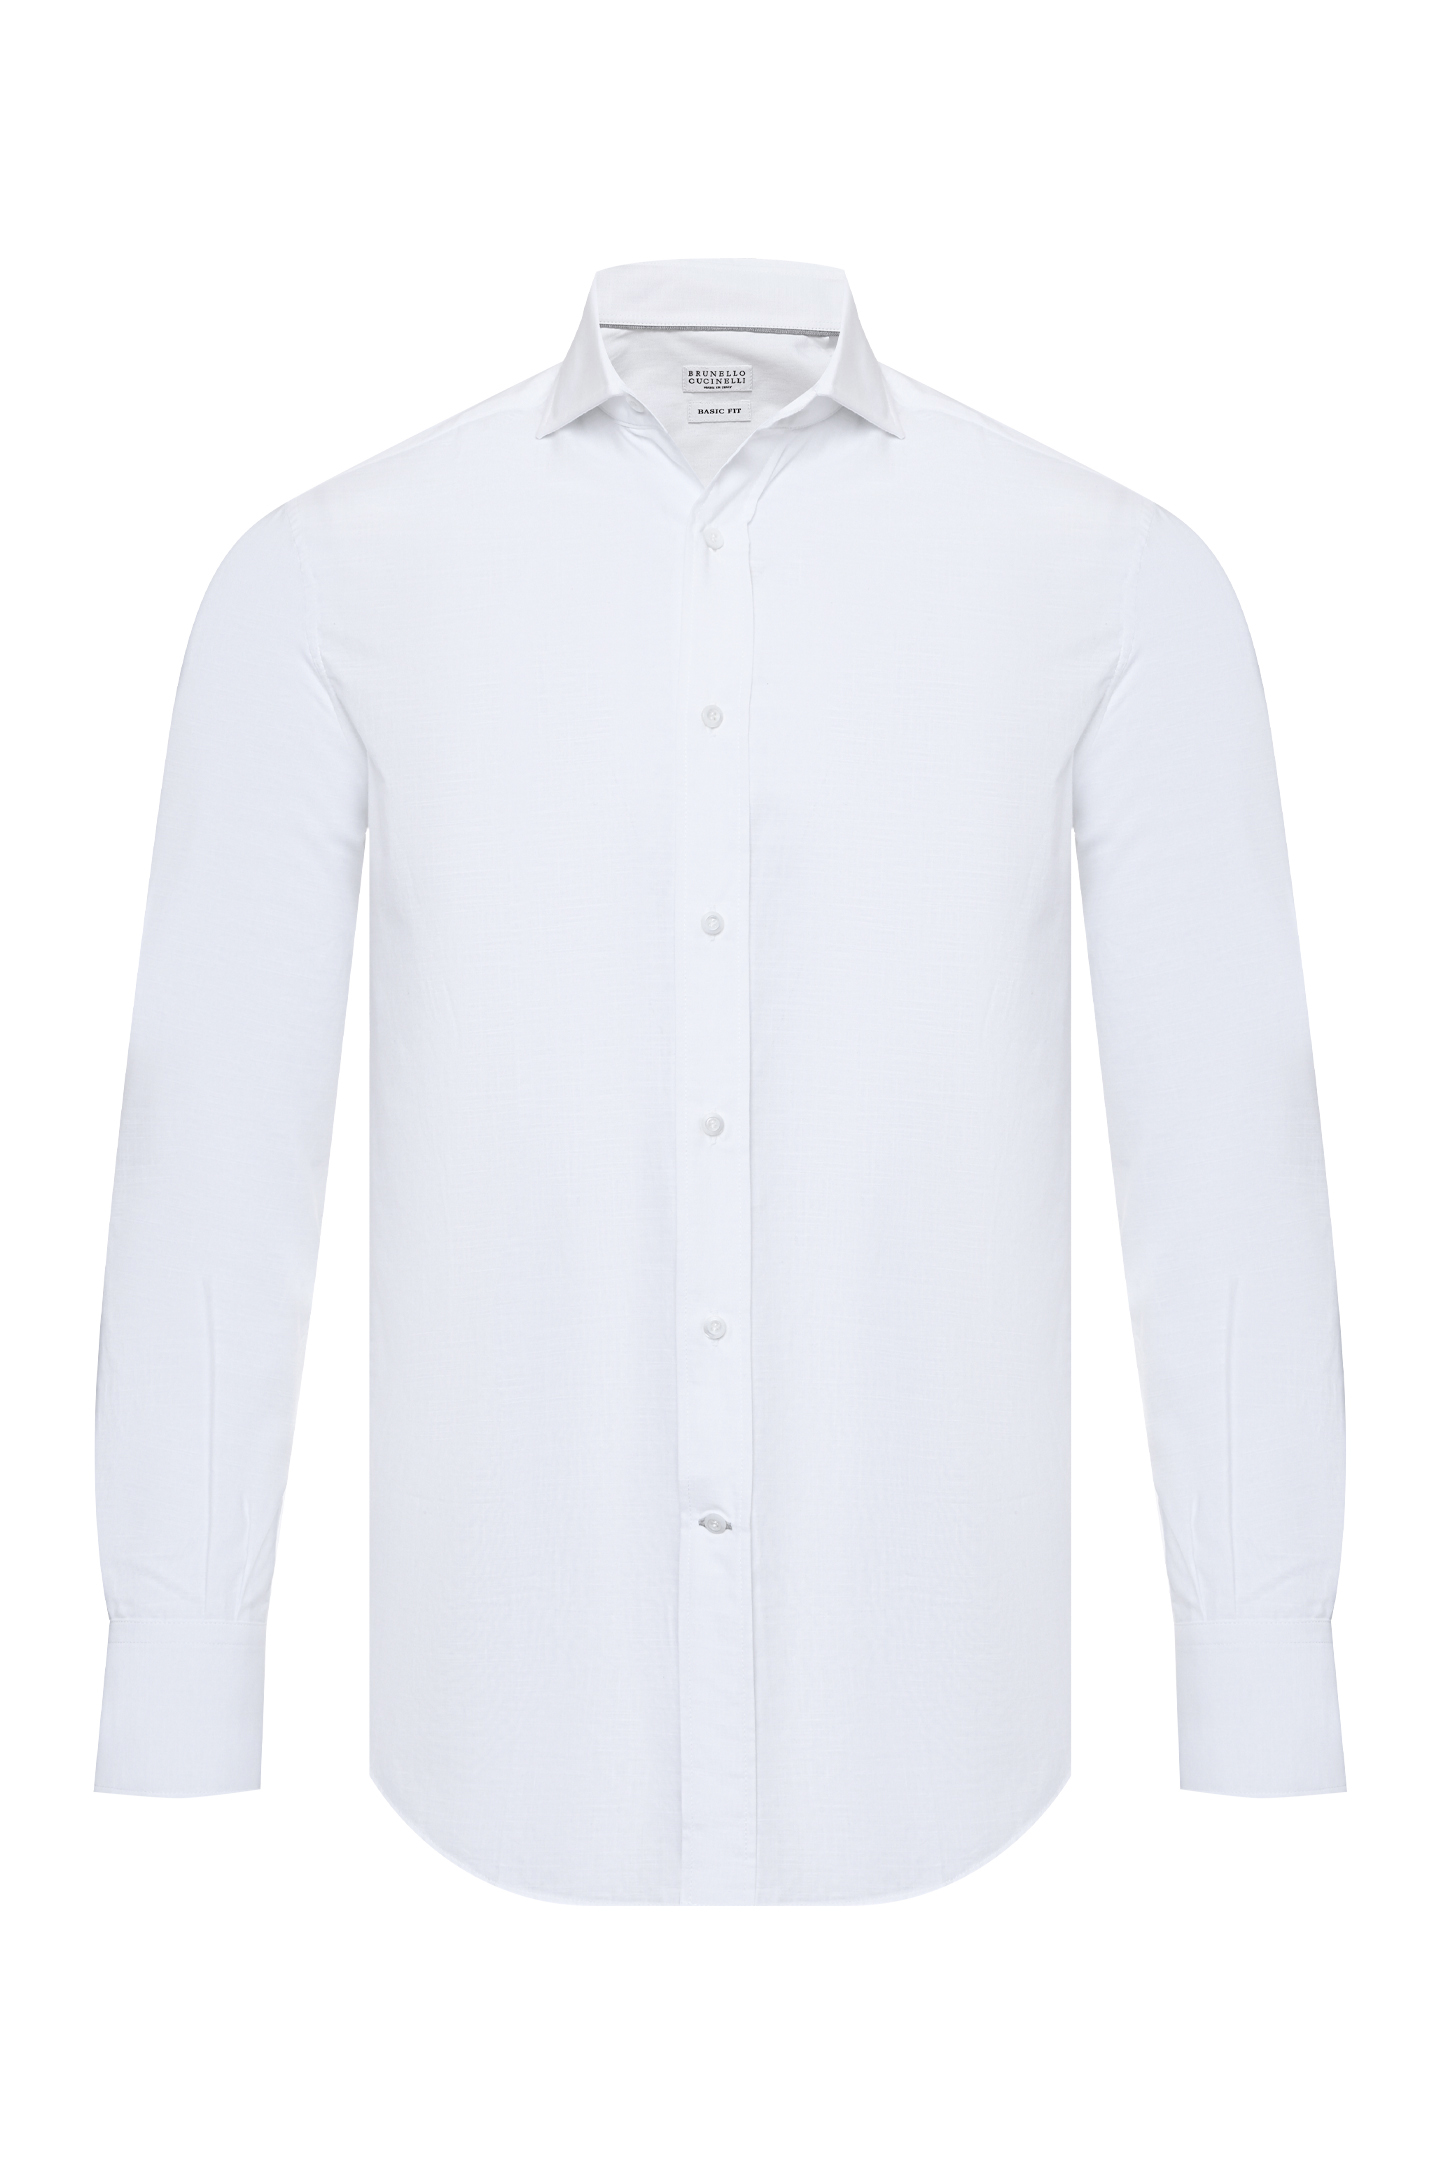 Рубашка BRUNELLO  CUCINELLI MS6660028, цвет: Белый, Мужской